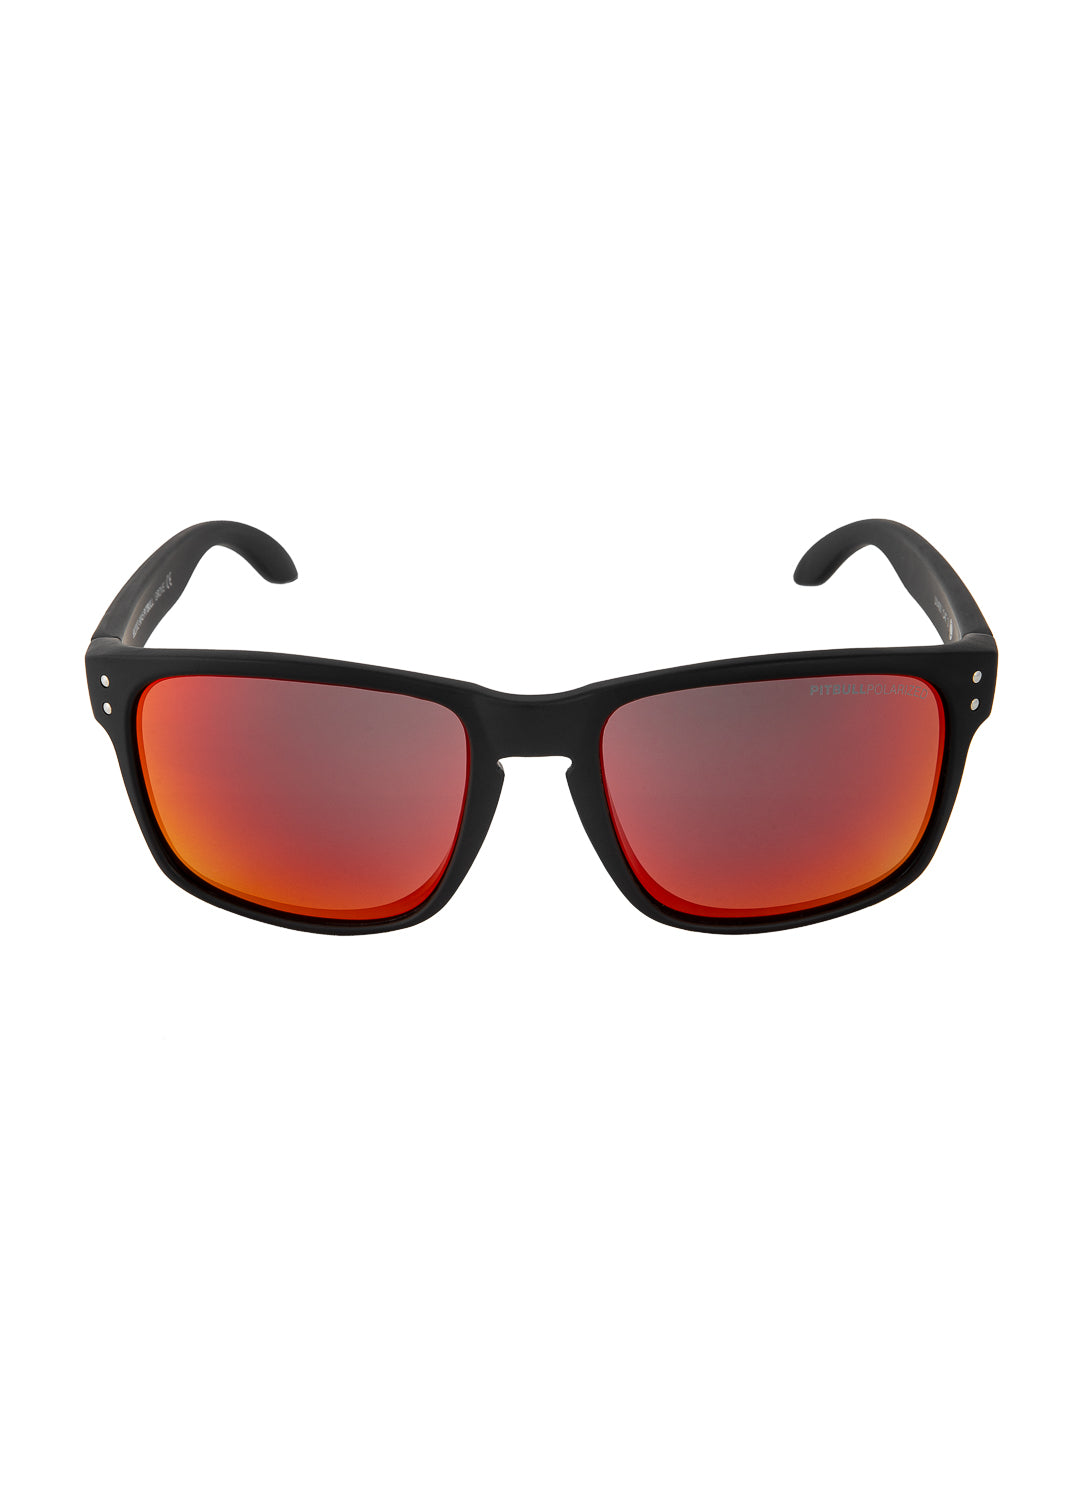 Sunglasses Black/Red GROVE.